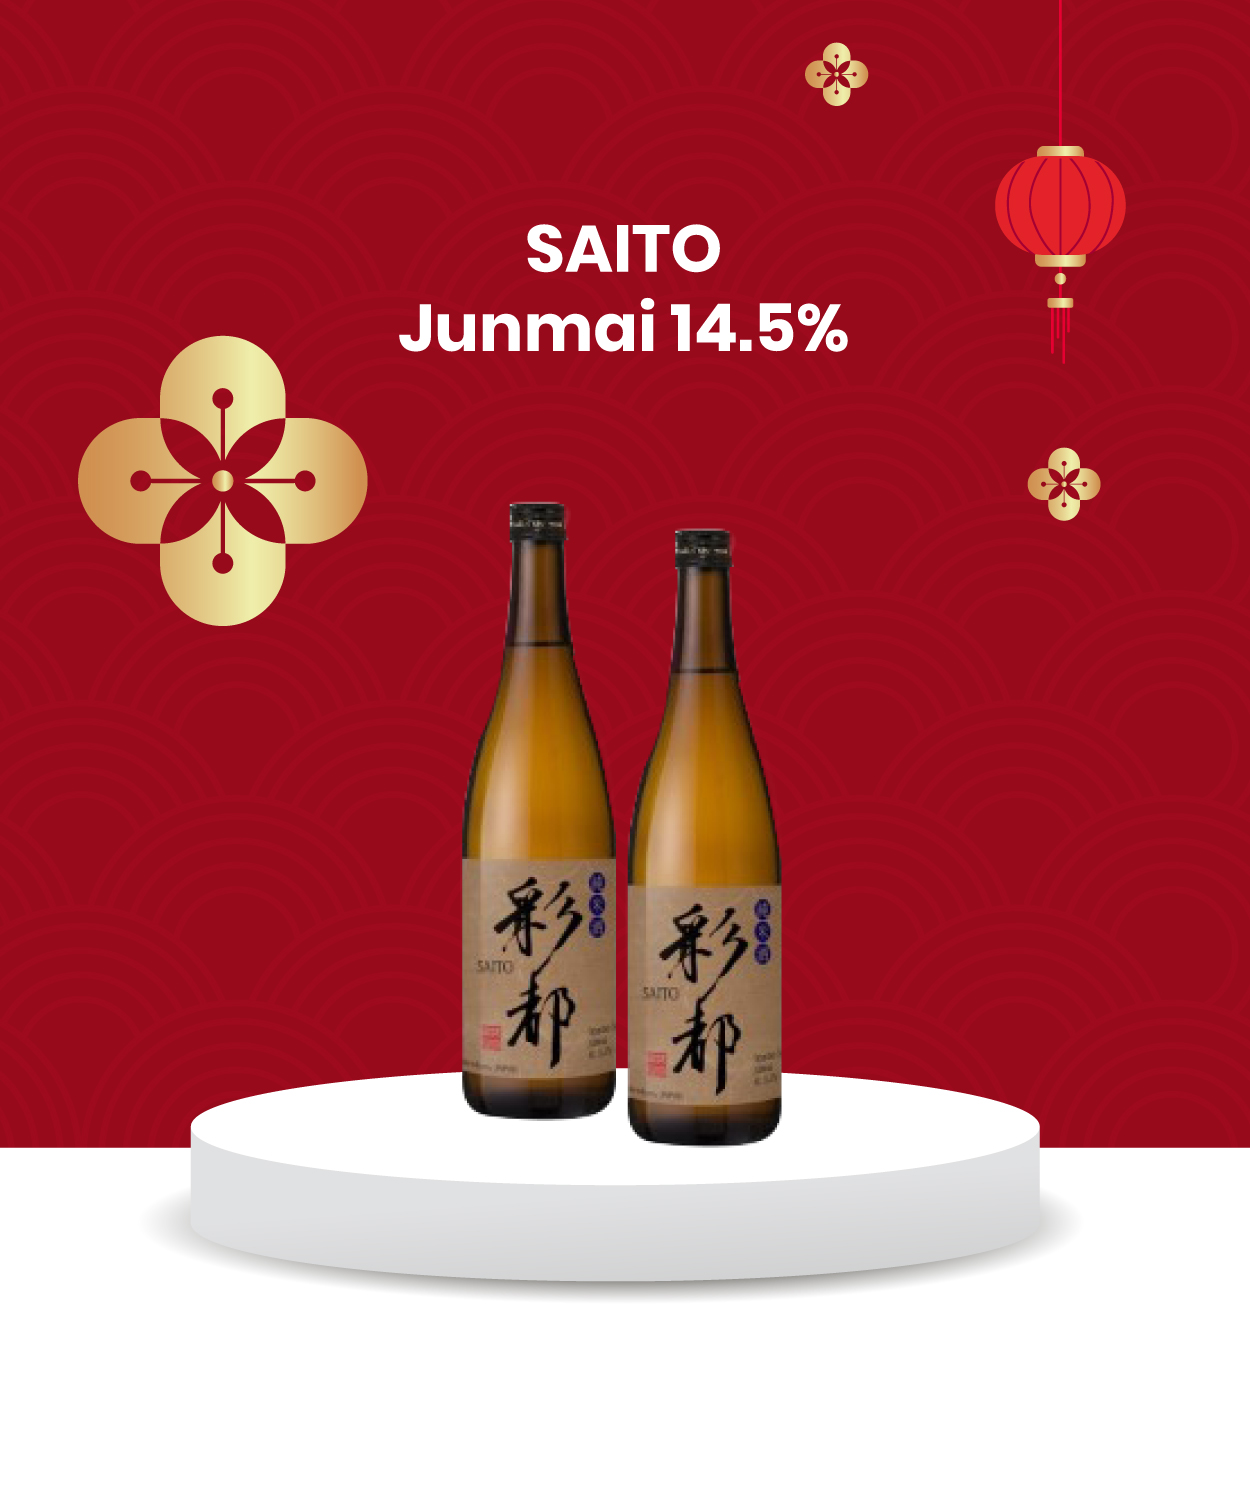 dropee-bestseller-campaign-saito-junmai-sake-item-1